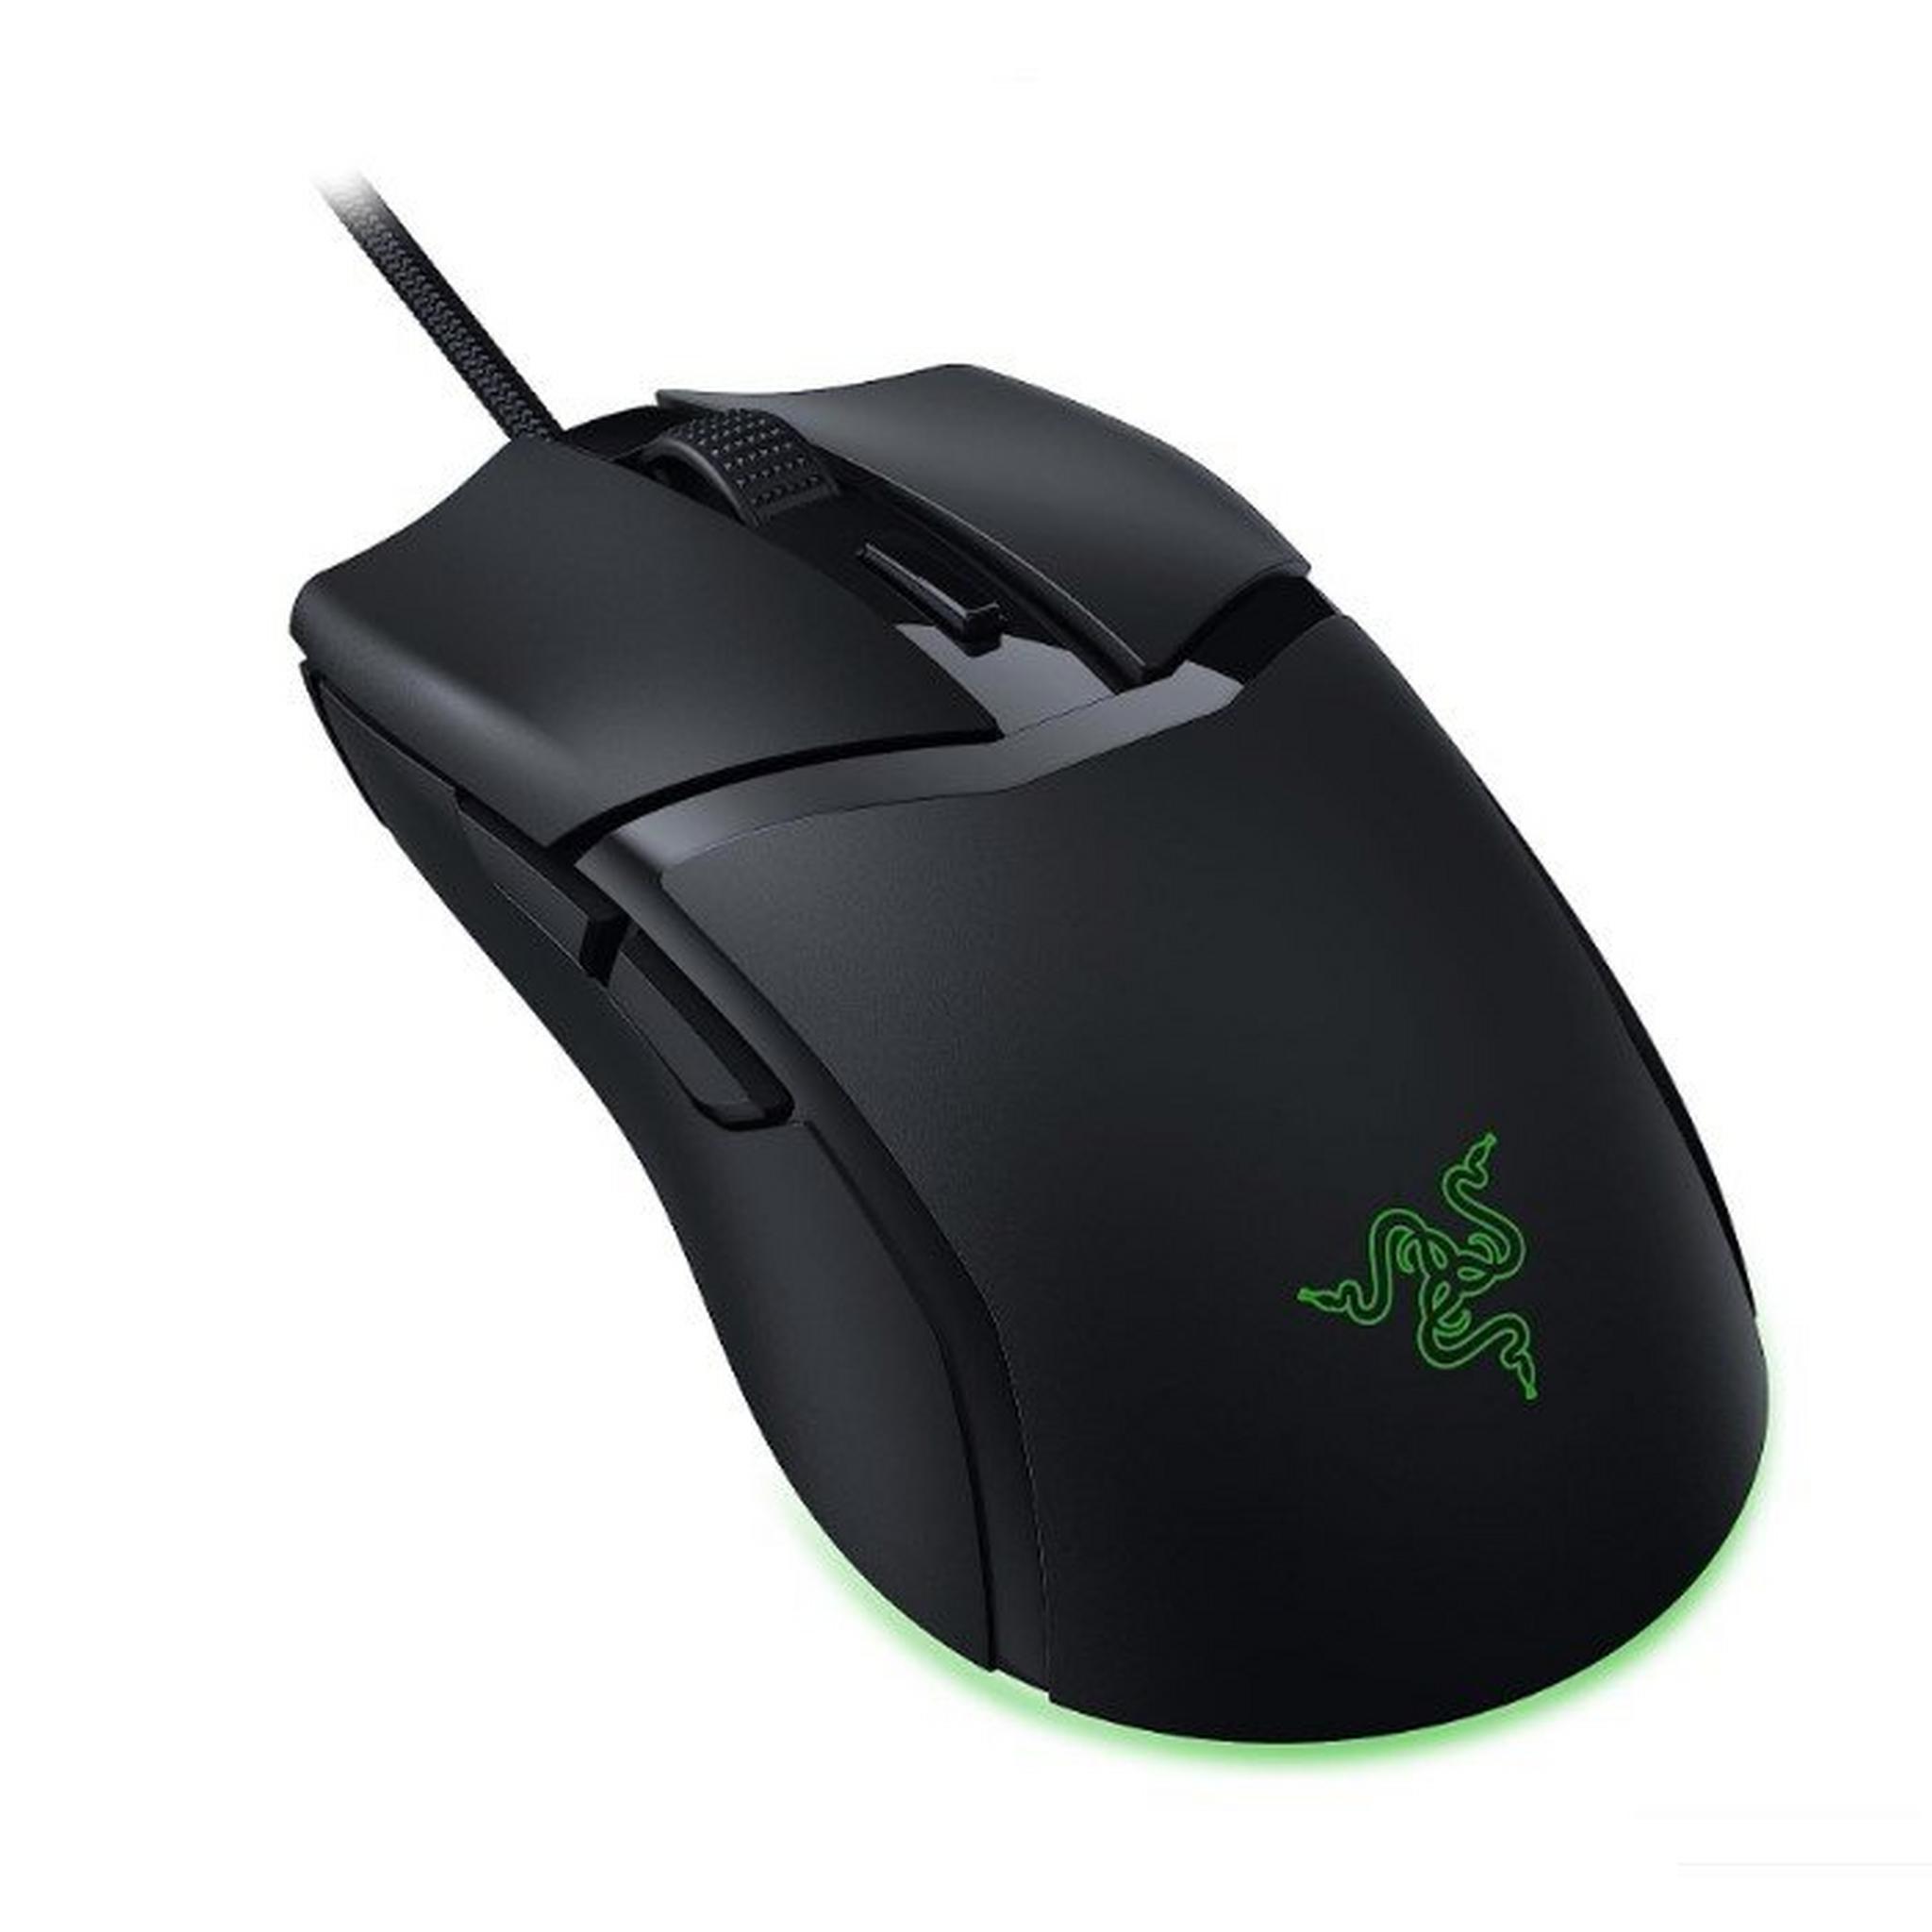 Razer Cobra Wired Gaming Mice, Chroma RGB Lighting, RZ01-04650100-R3M1 – Black